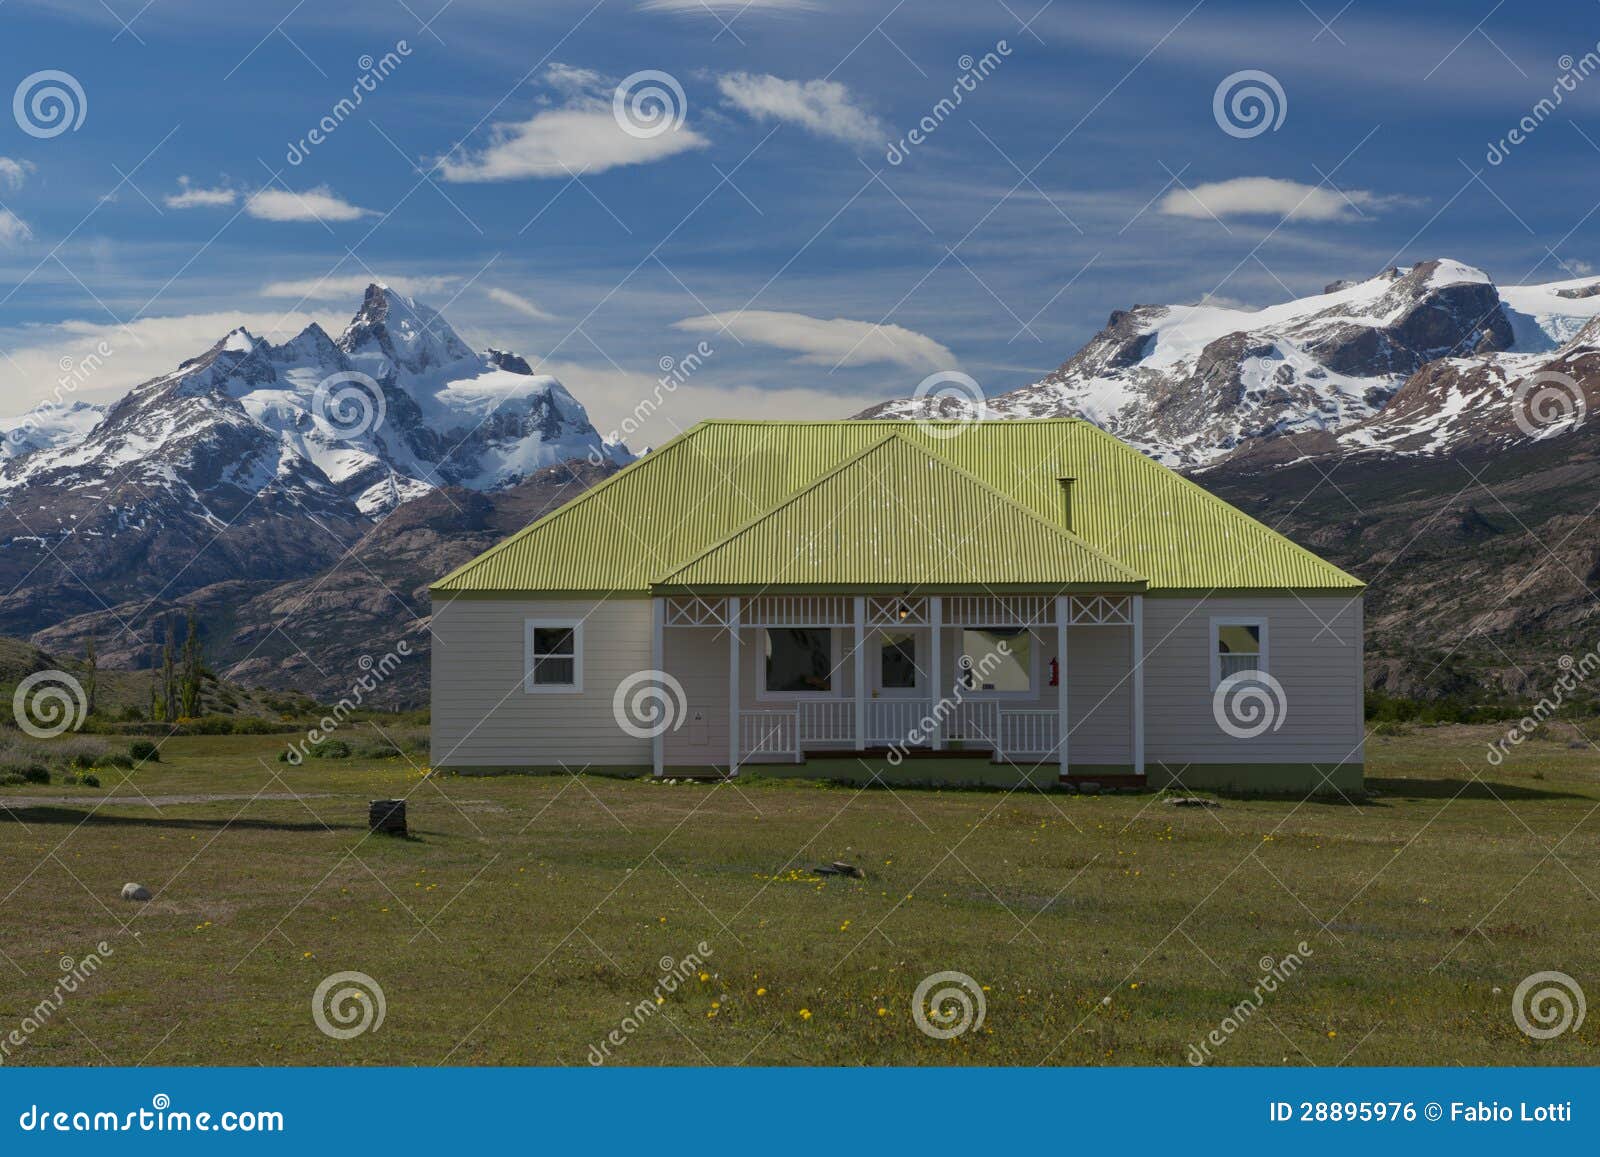 the farm of estancia cristina in los glaciares national park